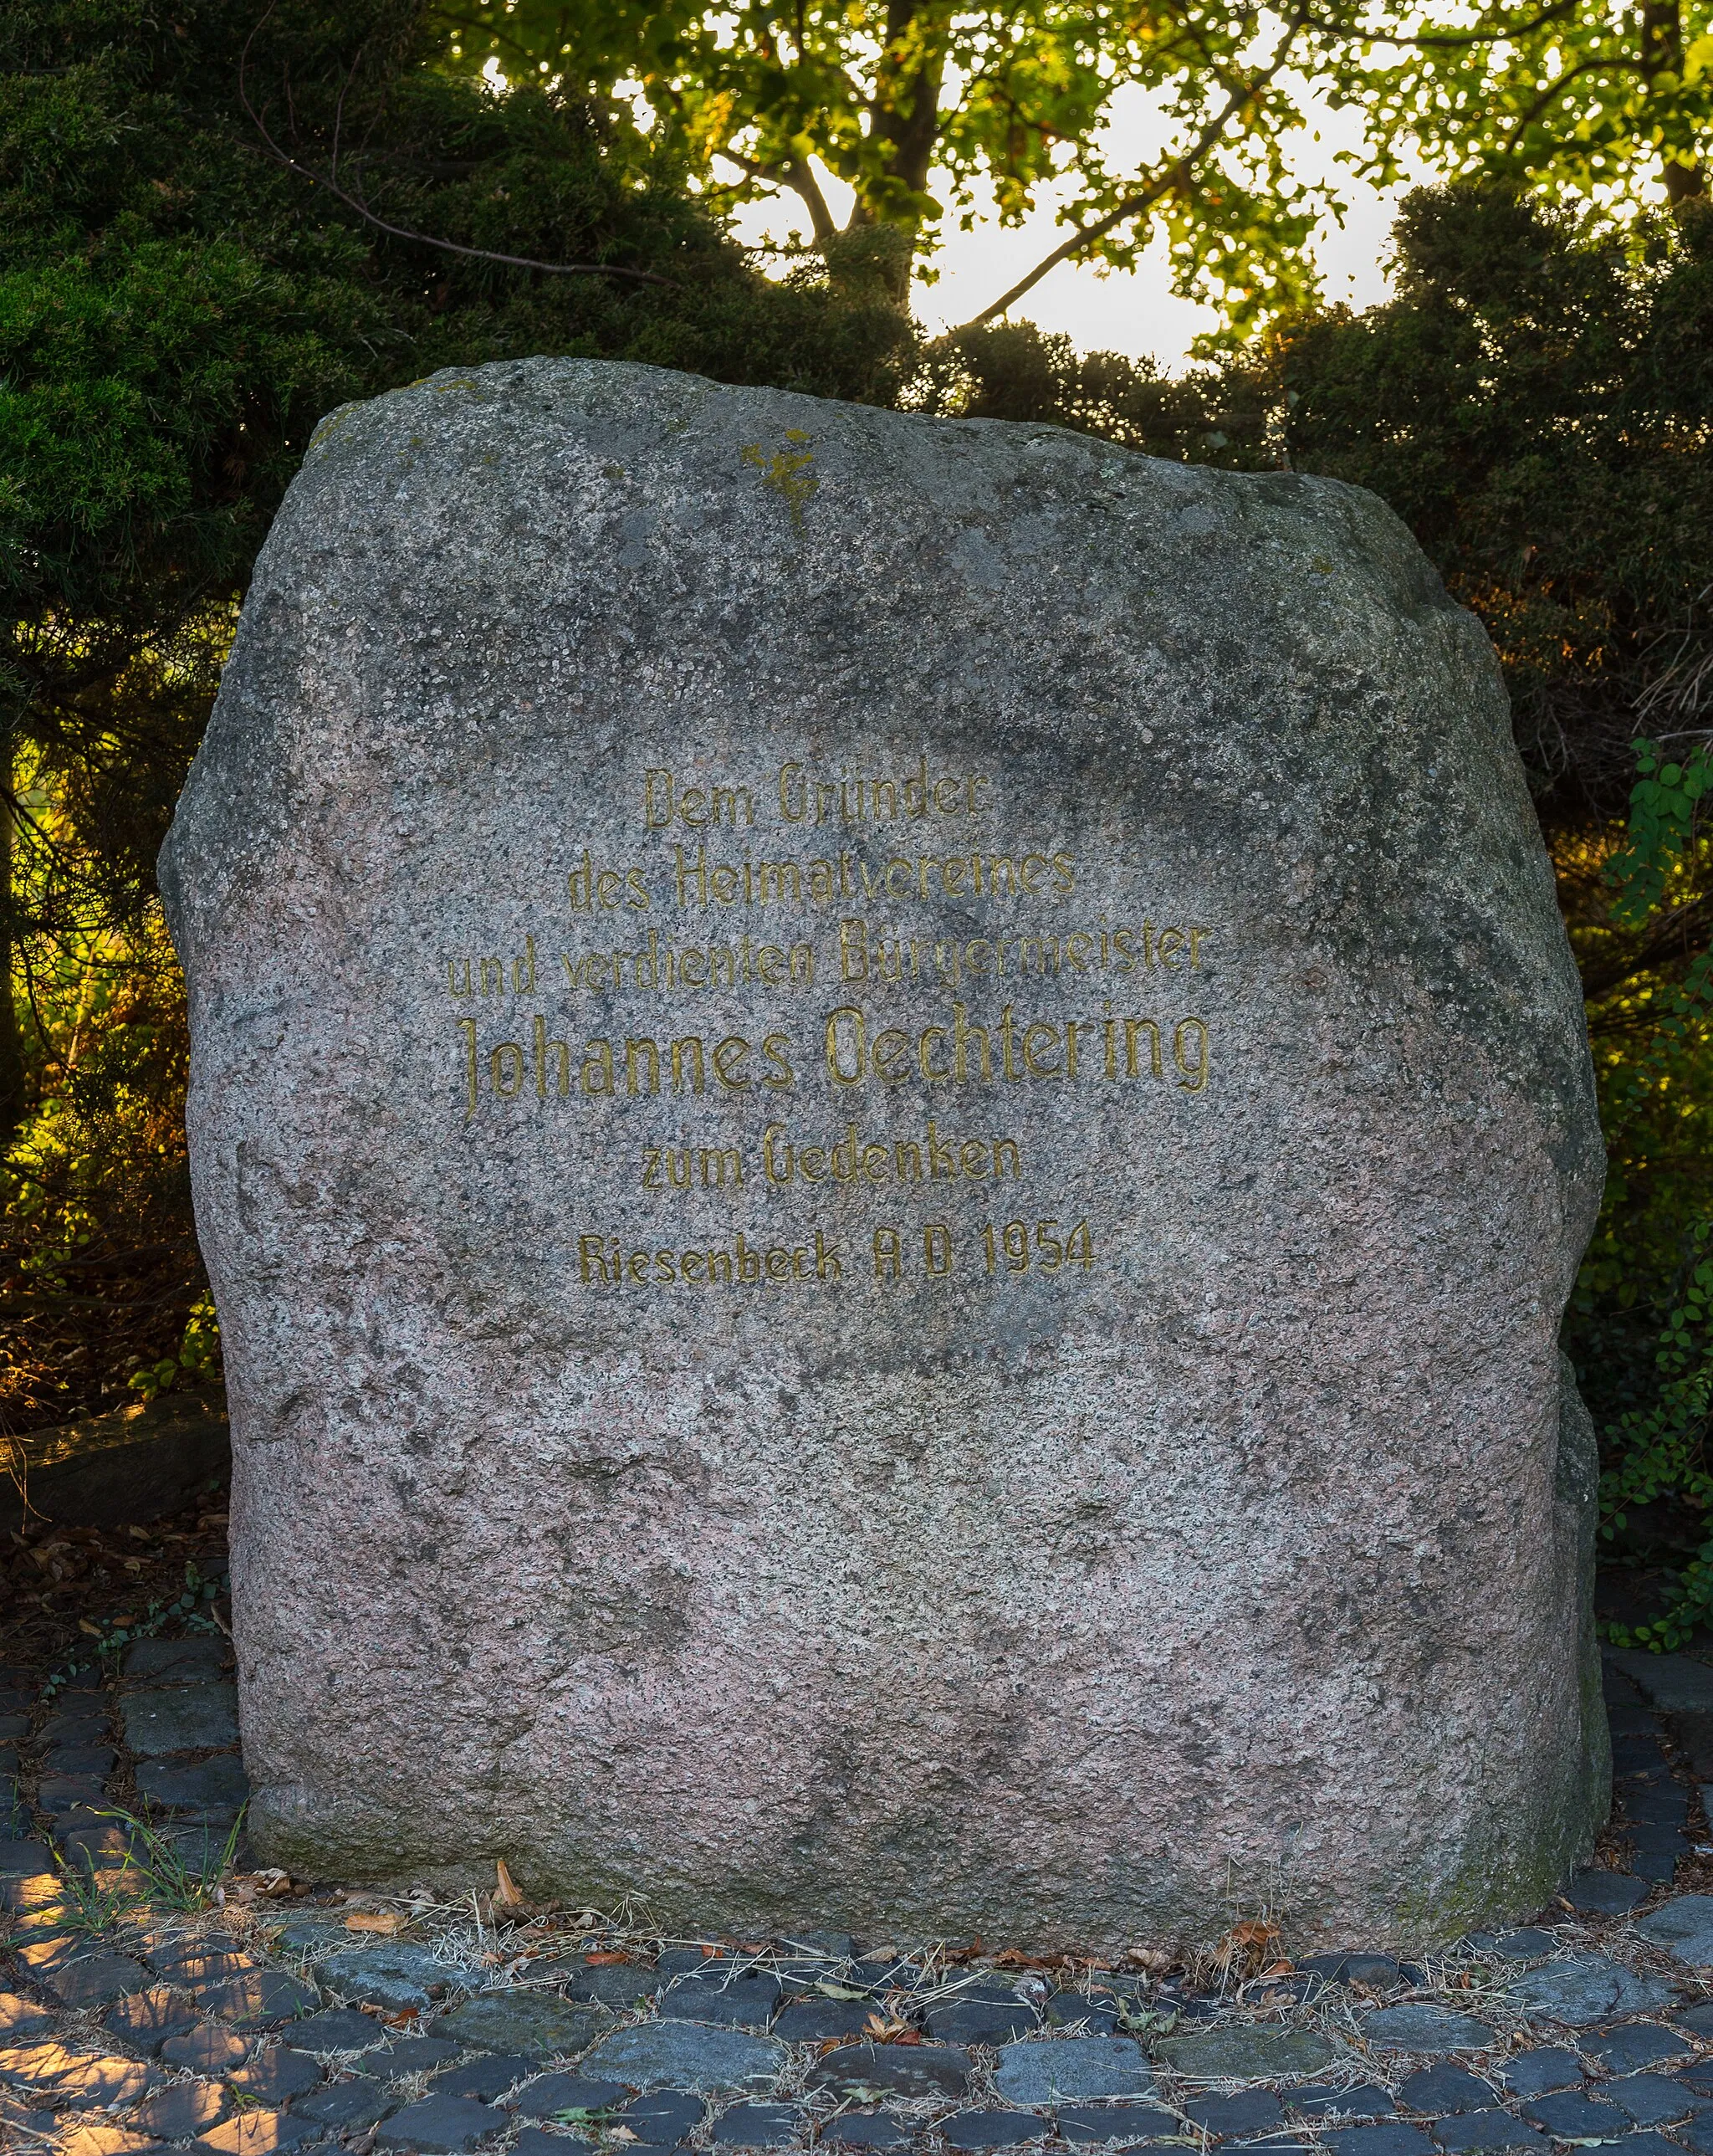 Photo showing: Memorial to Johannes Oechtering in Hörstel-Riesenbeck, Kreis Steinfurt, North Rhine-Westphalia, Germany. The memorial stone, a glacial erratic, was unveiled in 1954.